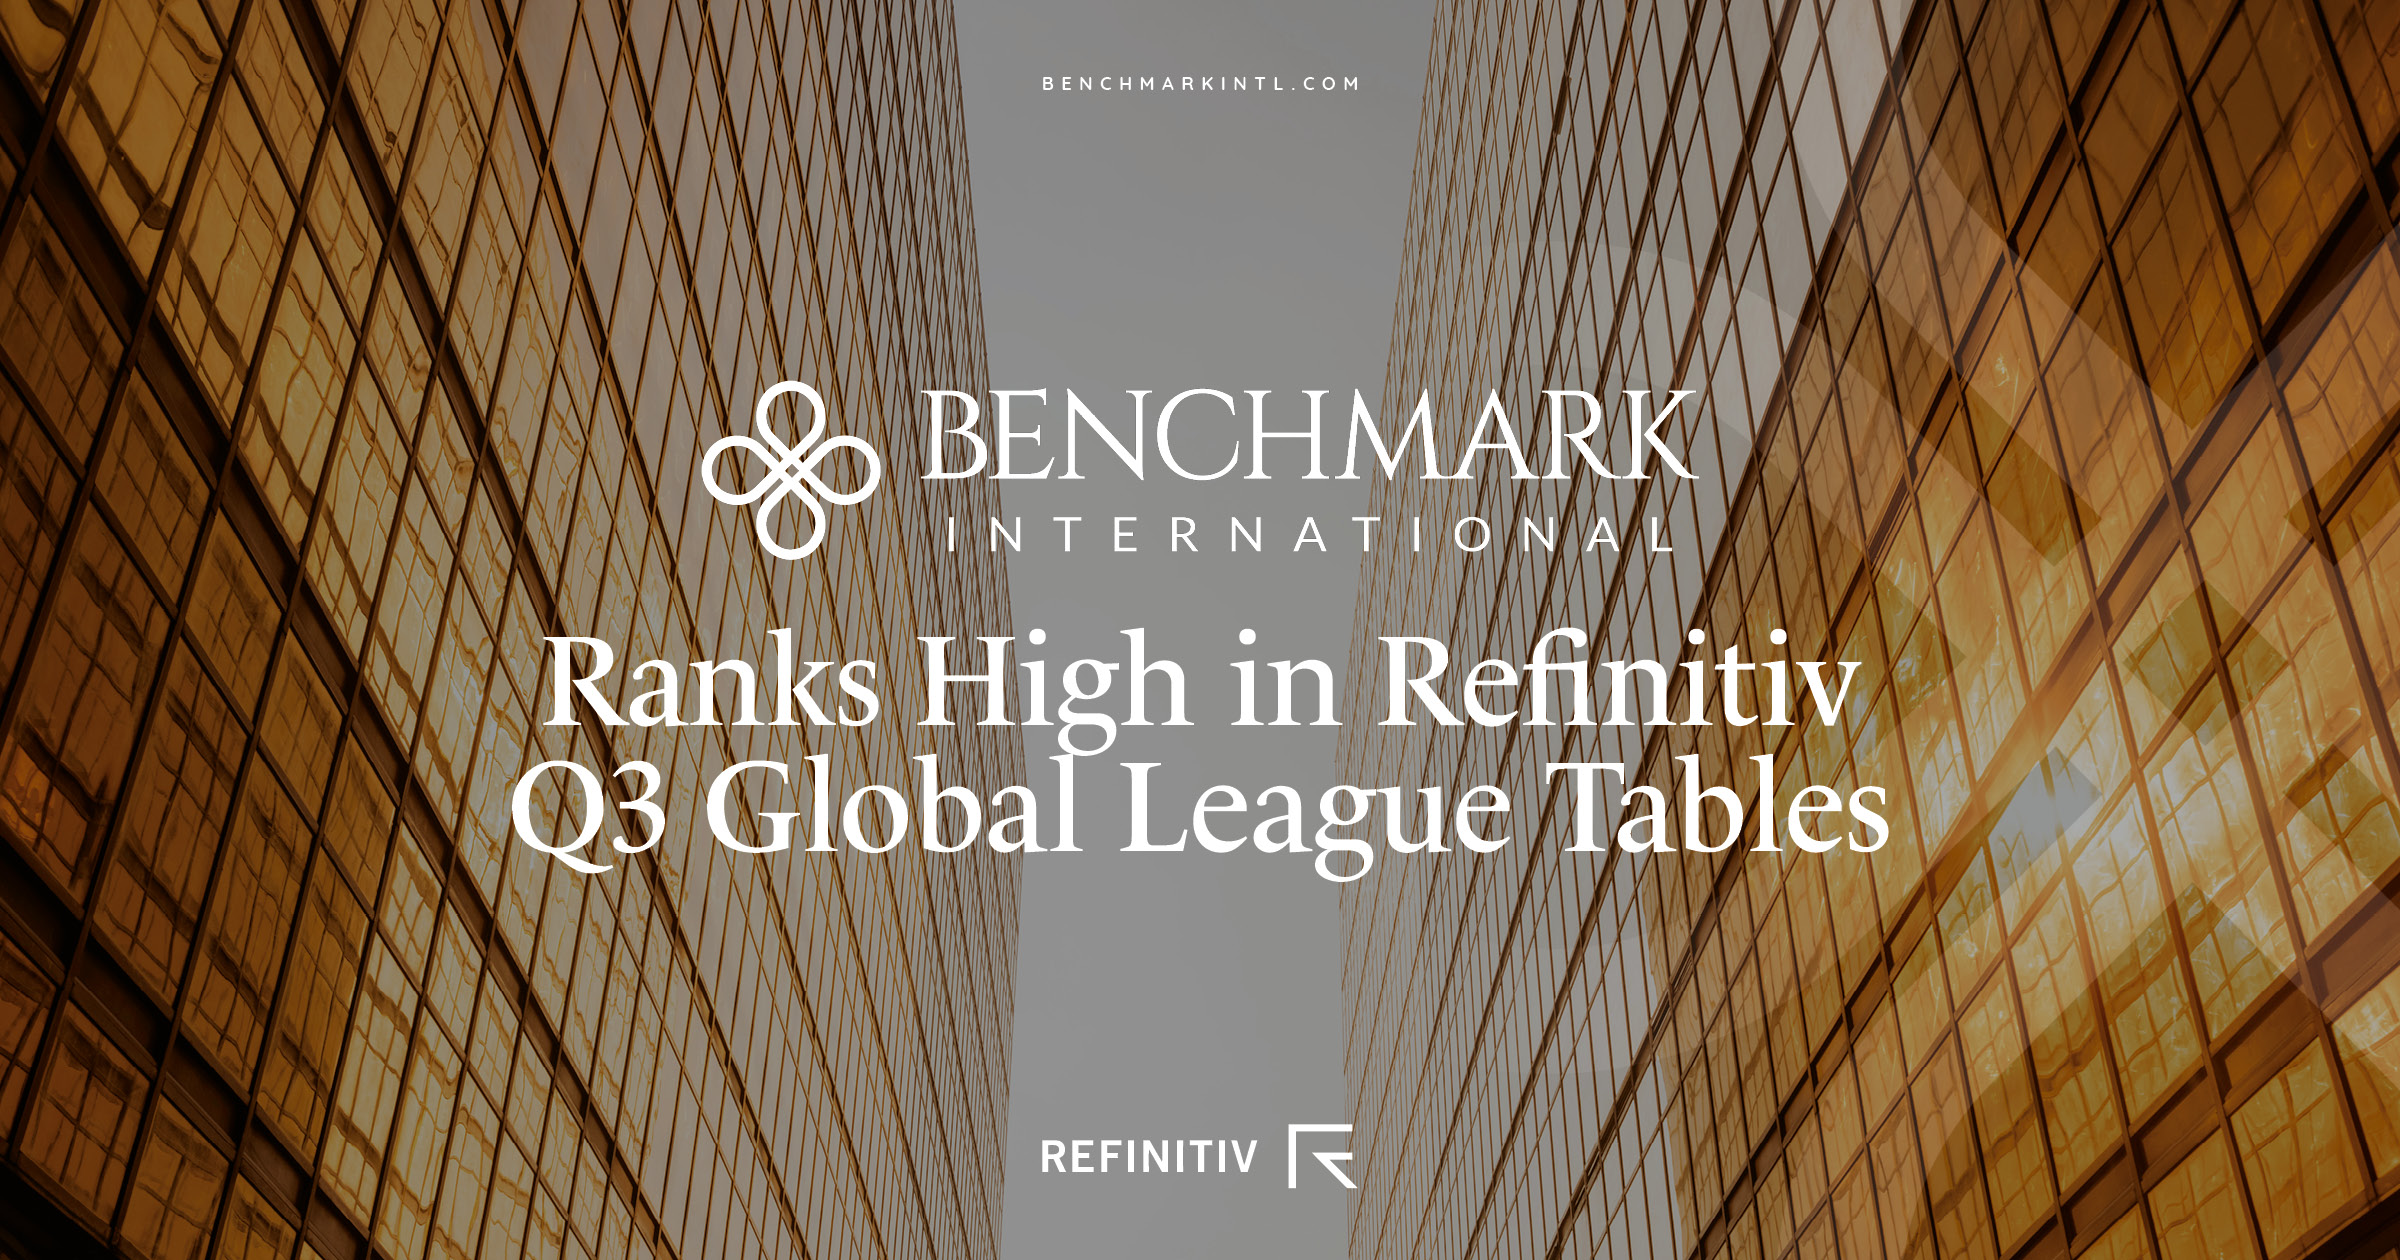 Benchmark International Ranks High in Refinitiv Q3 Global League